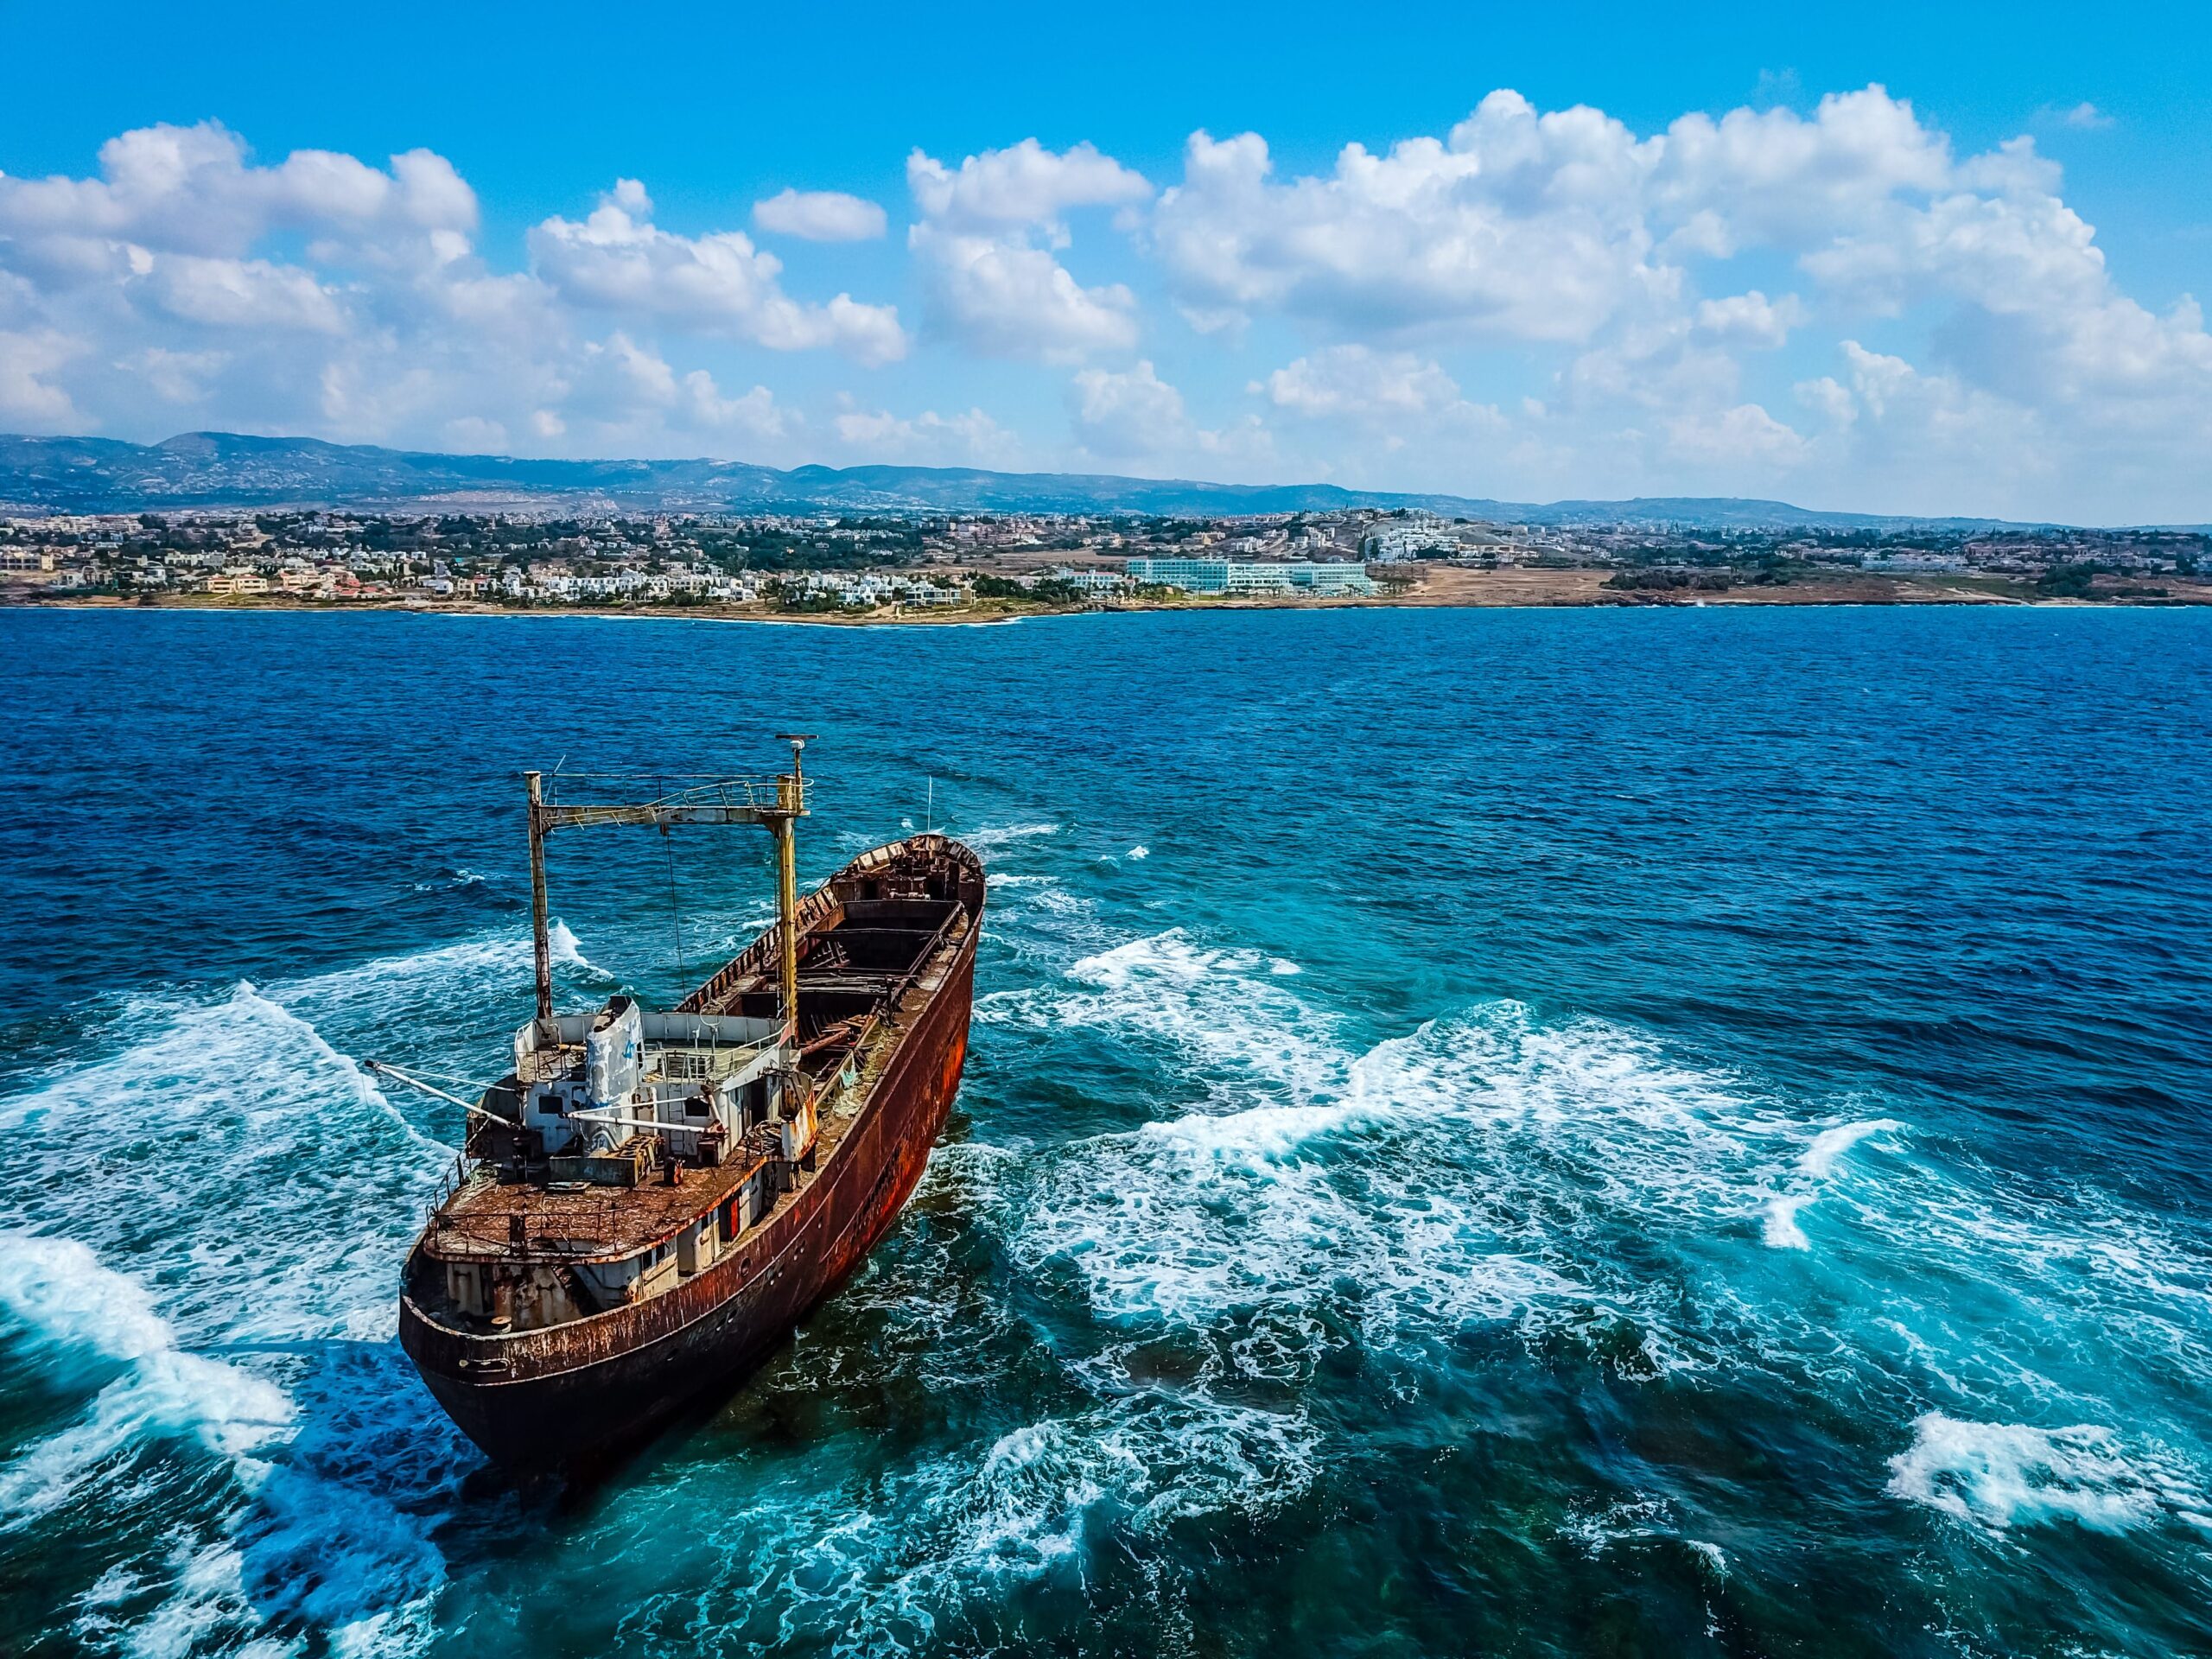 MV Demetrios 2 Shipwreck of the coast of Pathos, Cyprus